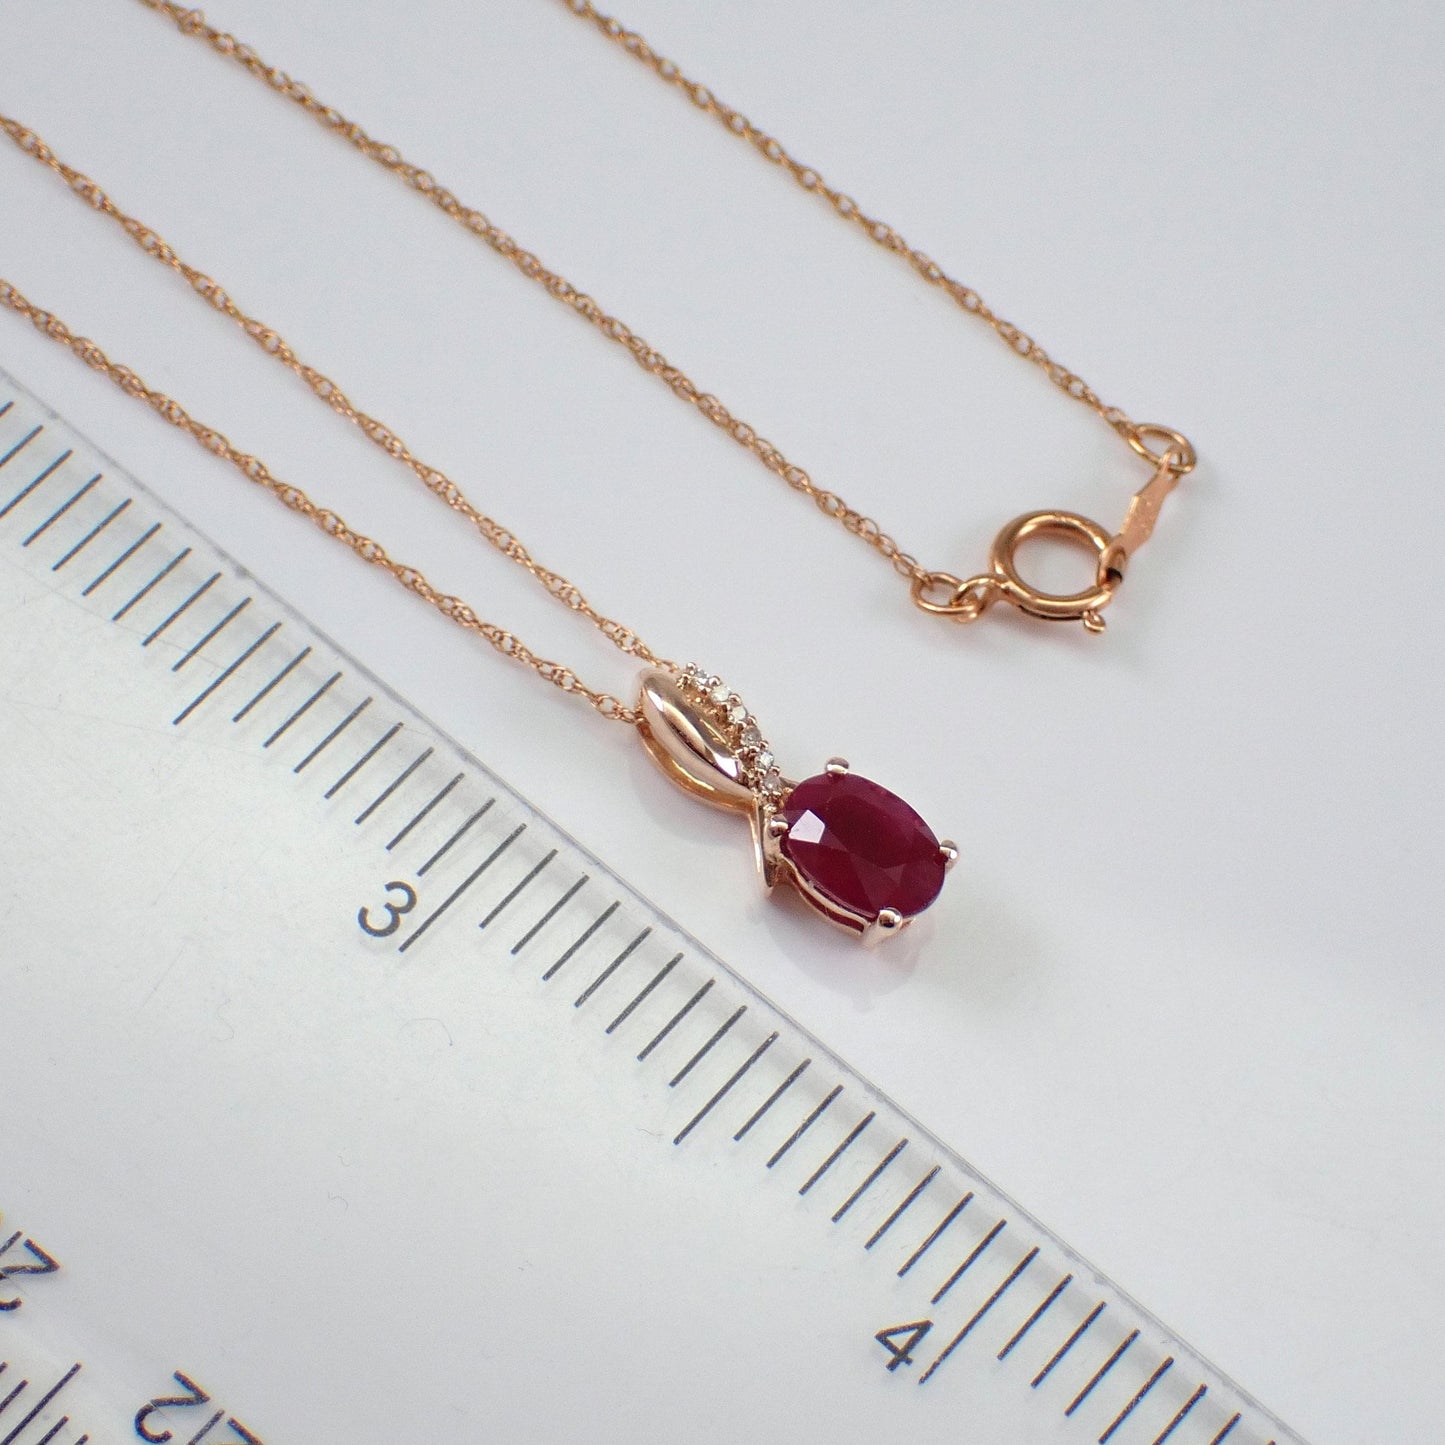 1.00 CT Oval Cut Gemstone Diamond Pendant Necklace